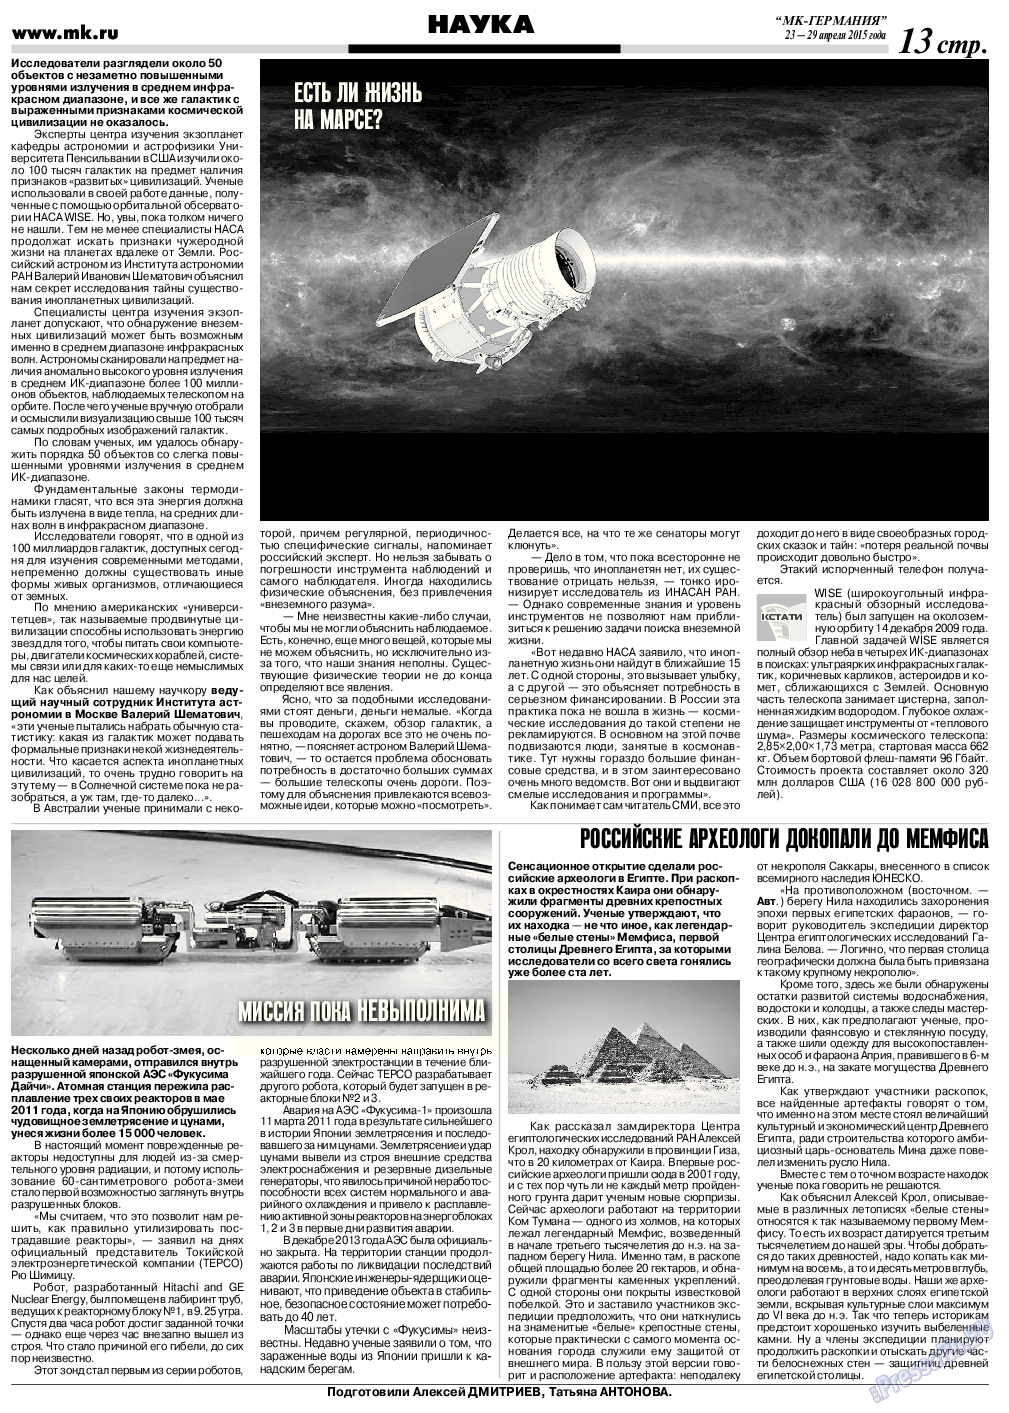 МК-Германия, газета. 2015 №17 стр.13